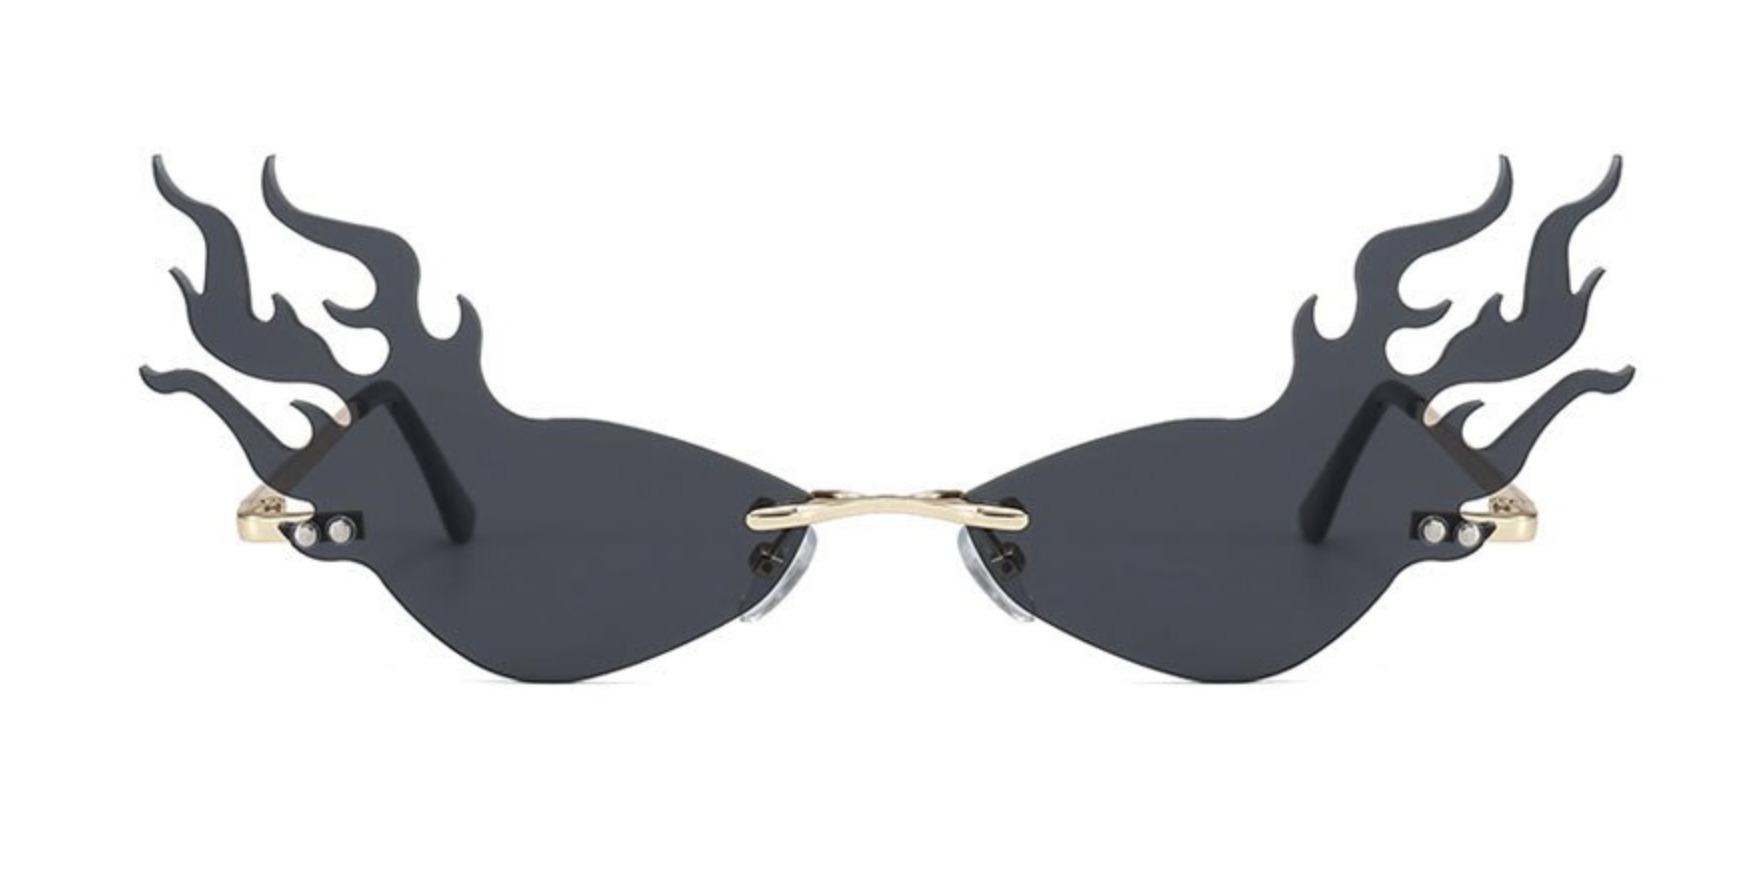 Black Fire Sunglasses